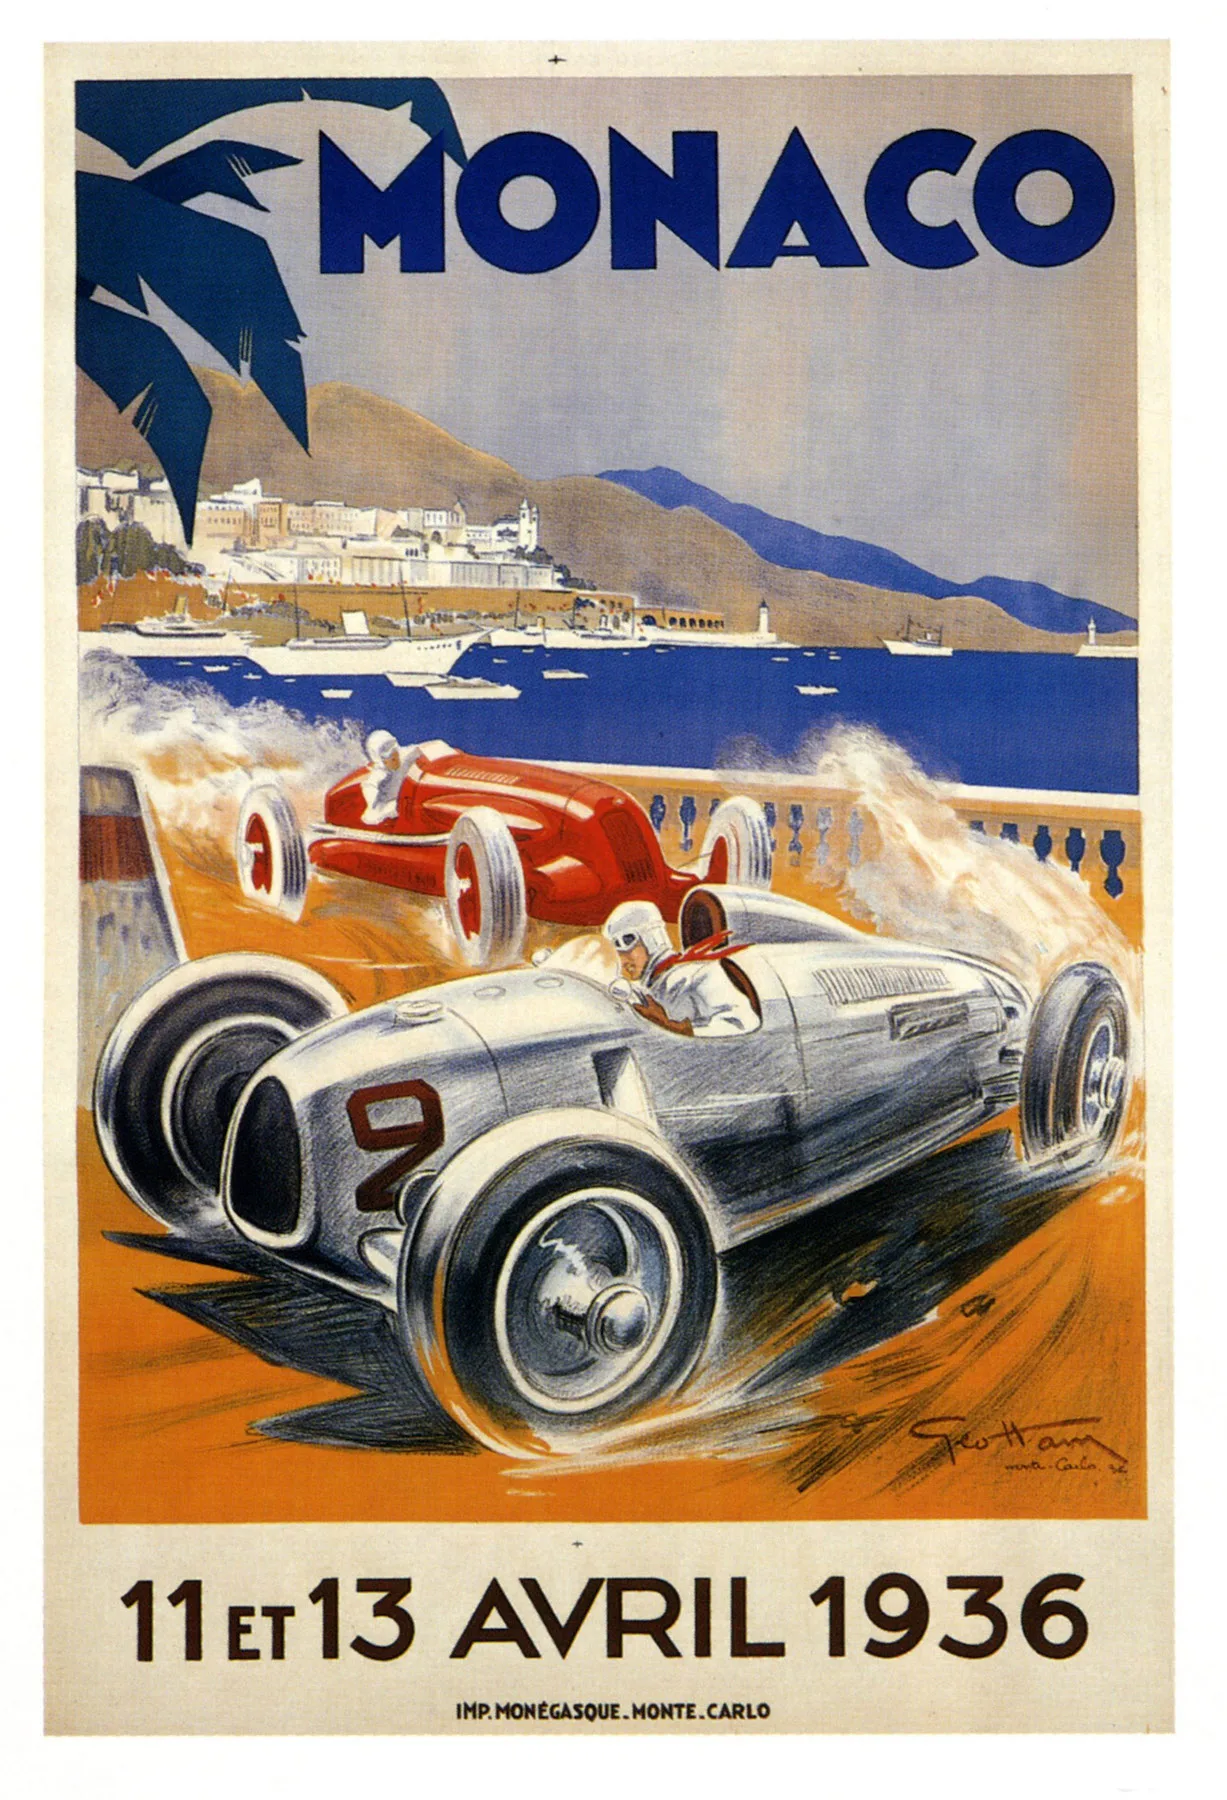 Details about   Monaco Grand Prix 1957 World Championships Vintage Poster Print Retro Style Art 